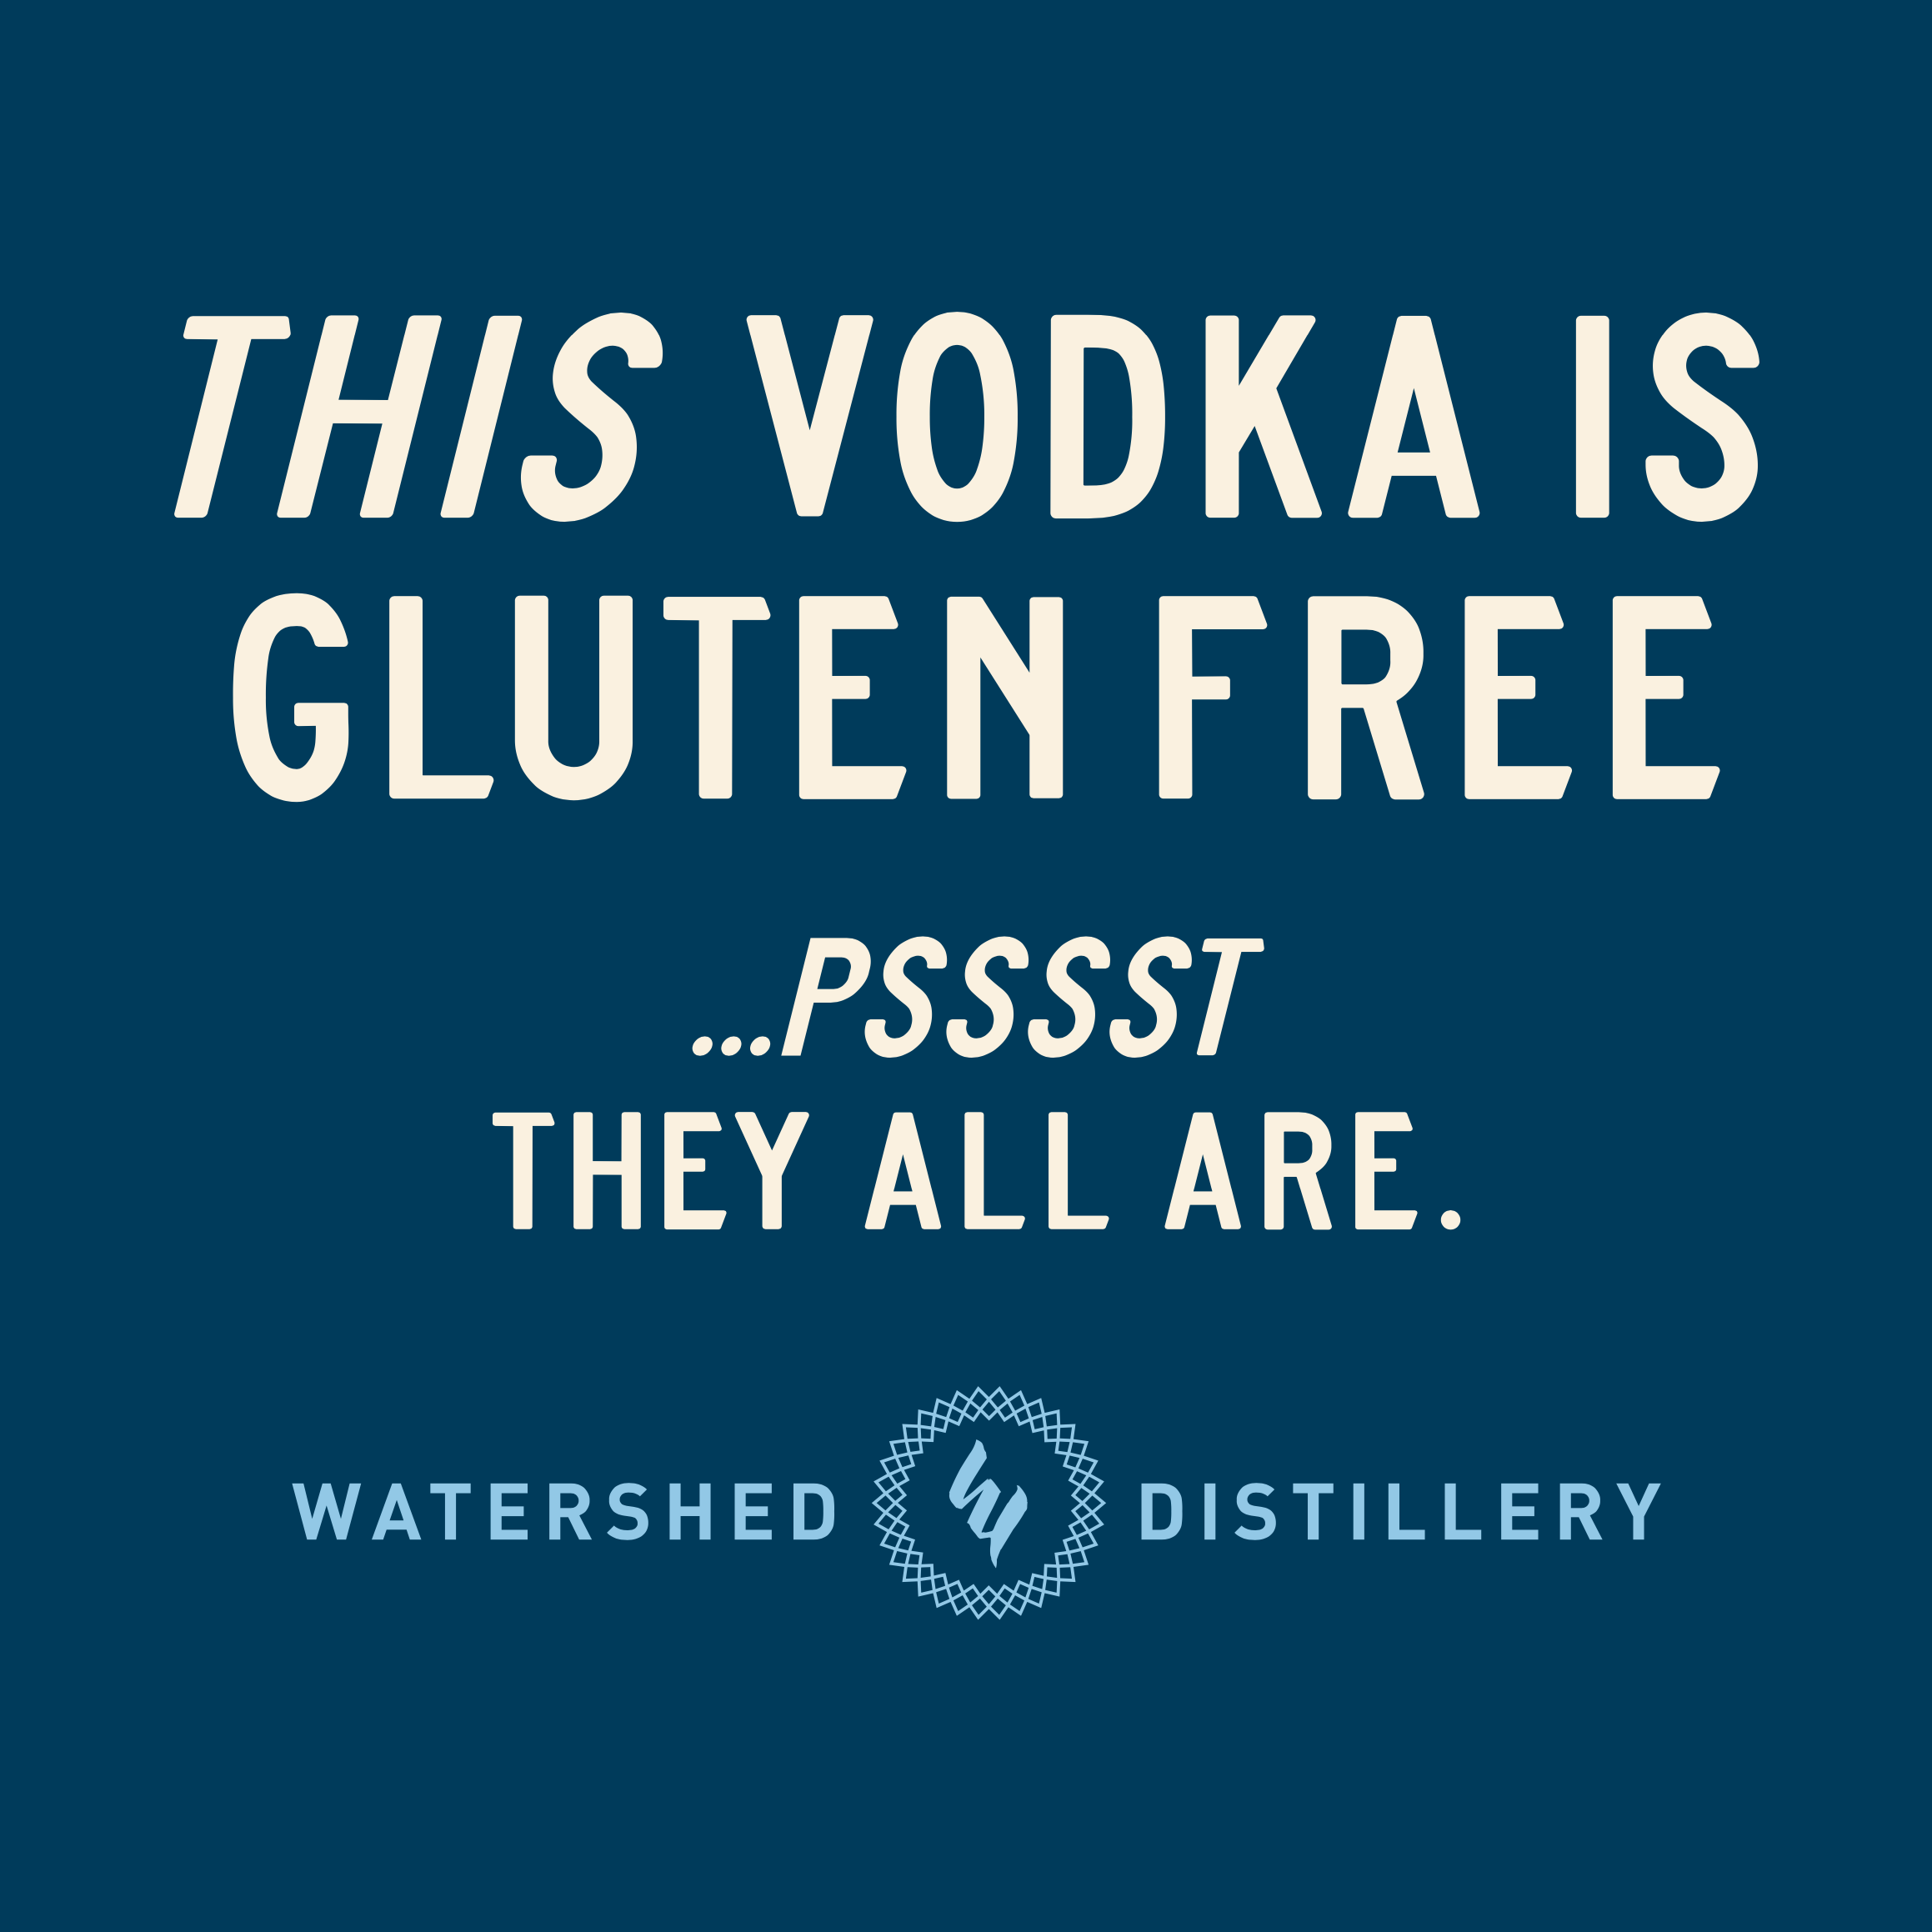 watershed-distillery-vodka_4_1280x1280.png